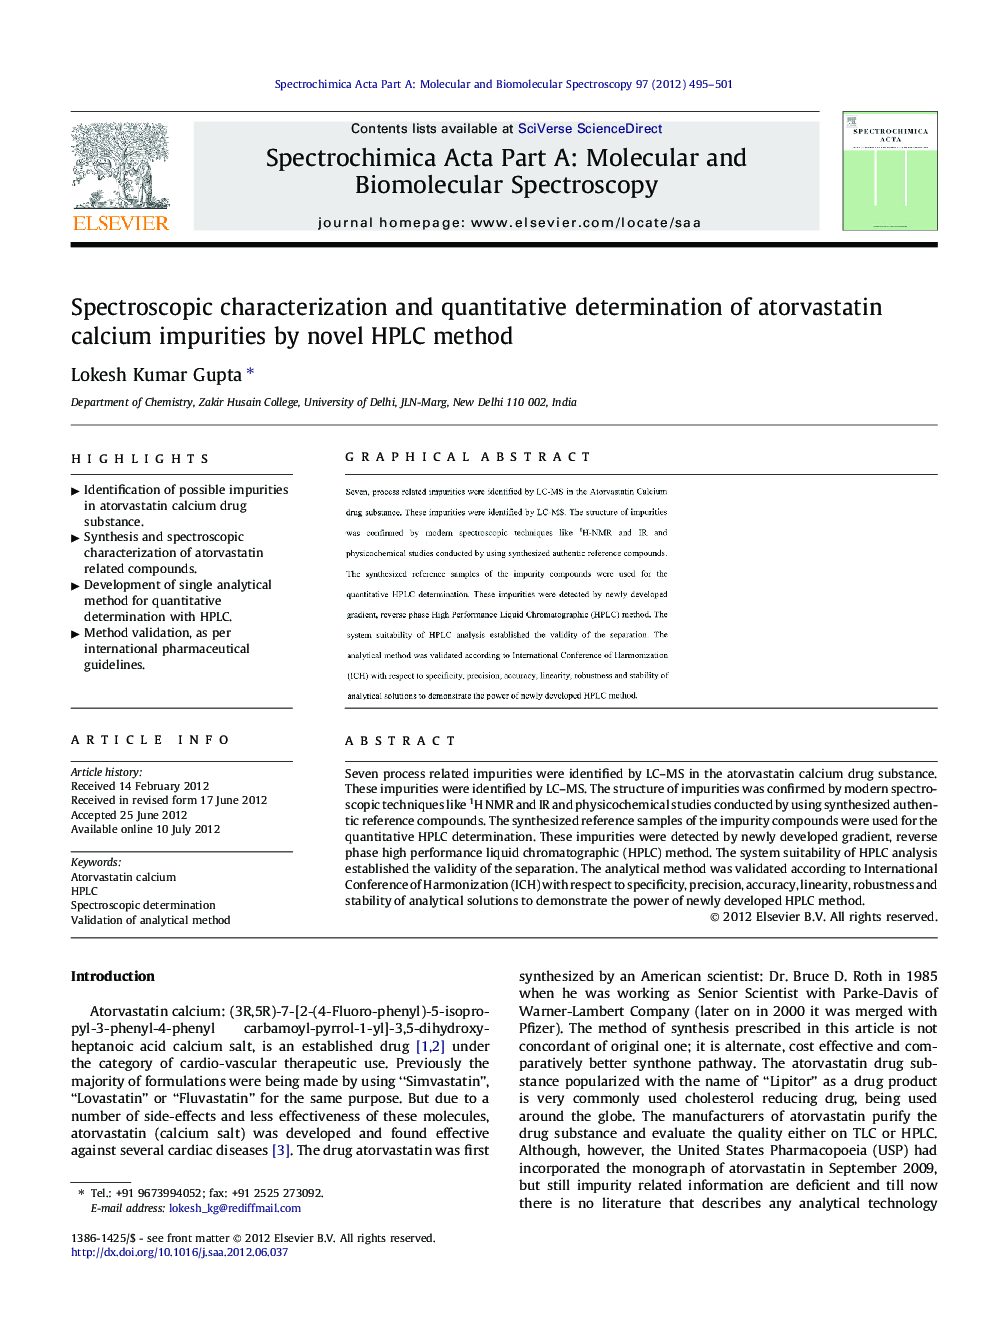 Spectroscopic characterization and quantitative determination of atorvastatin calcium impurities by novel HPLC method